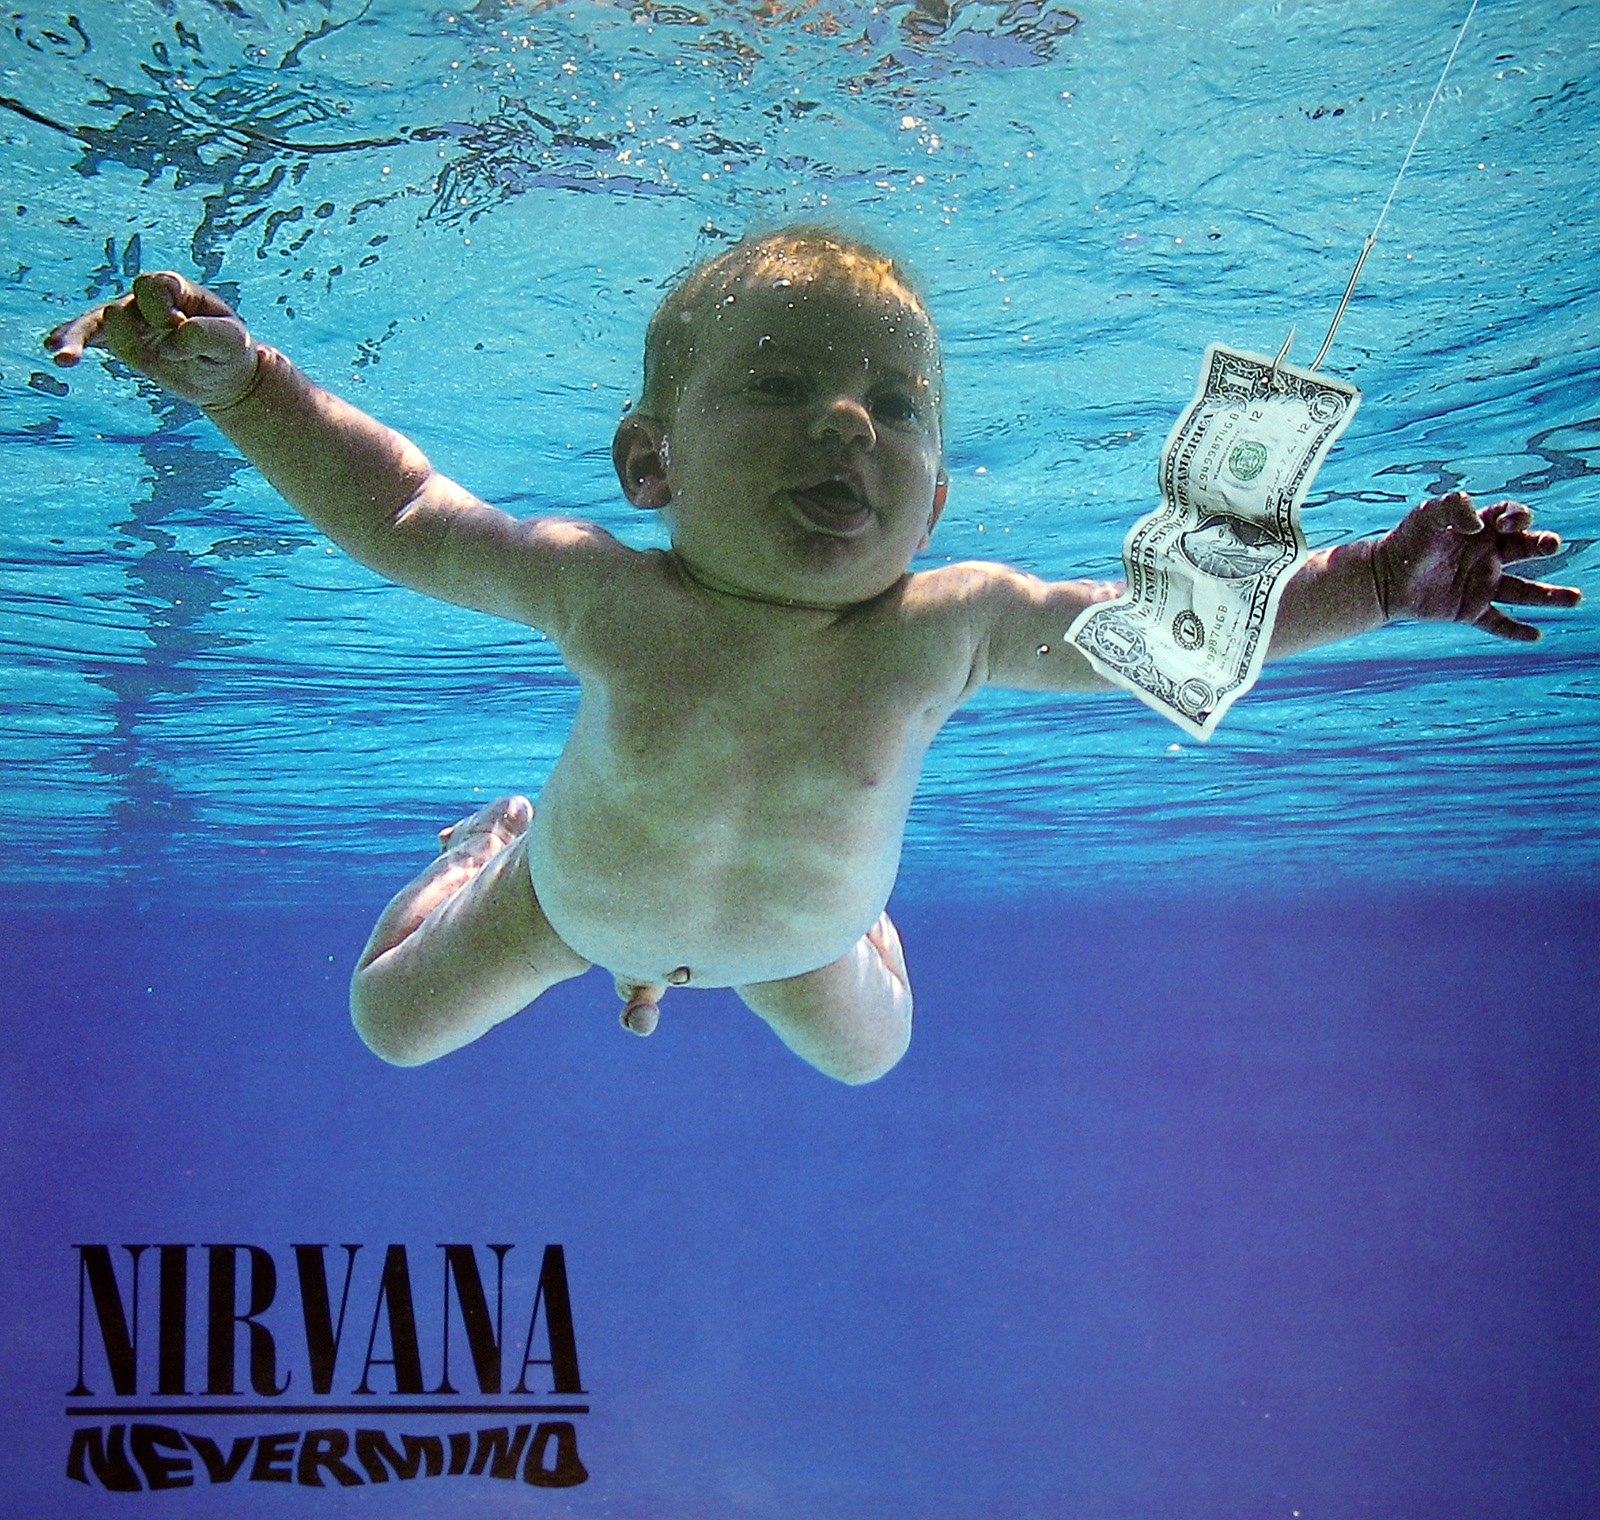 NIRVANA Nevermind Vinyl Album Cover Gallery & Information